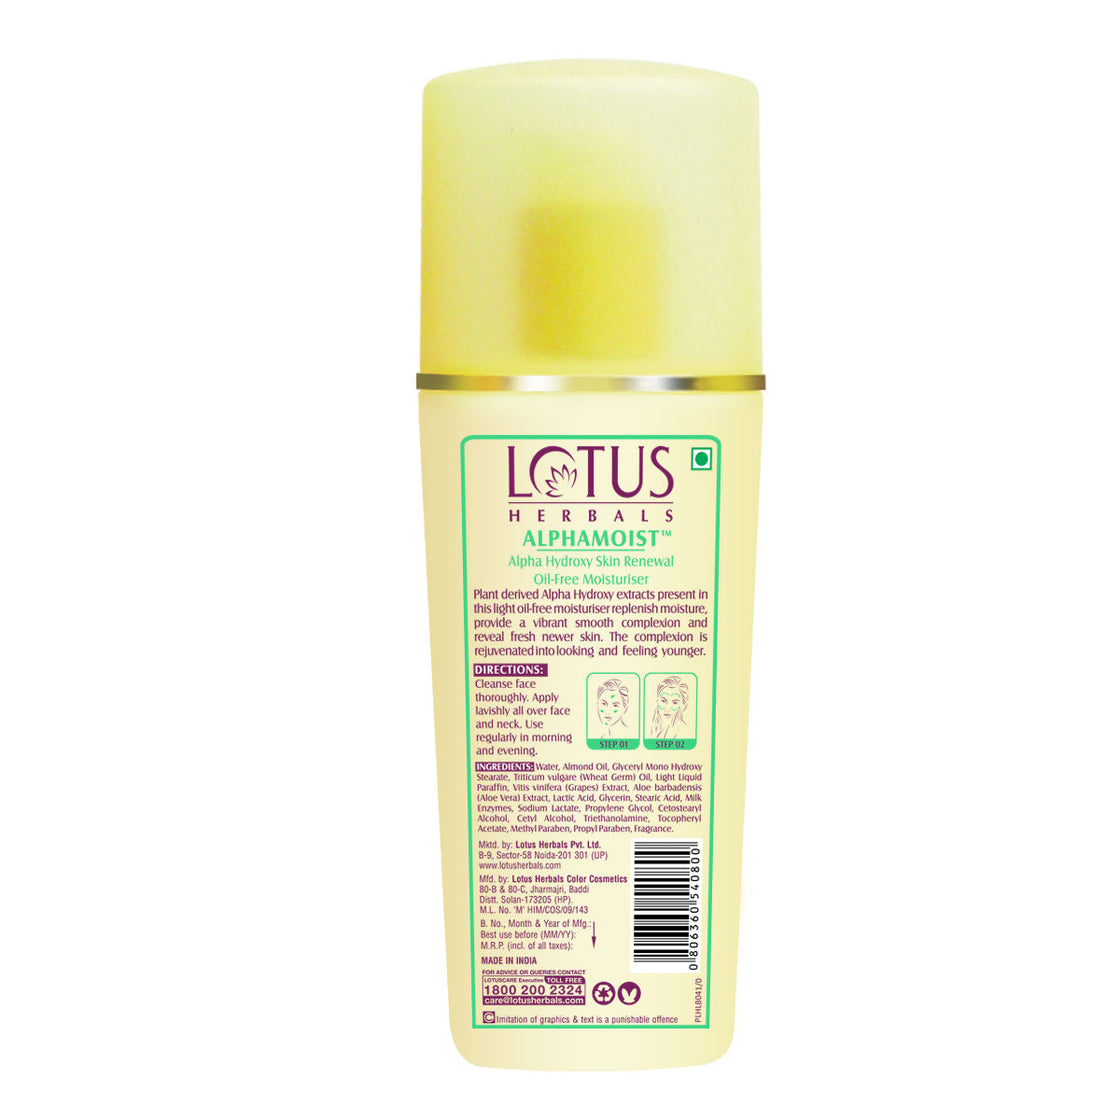 Lotus Herbal Alphamoist Alpha Hydroxy Skin Renewal Oilfree Moisturiser (80ml)